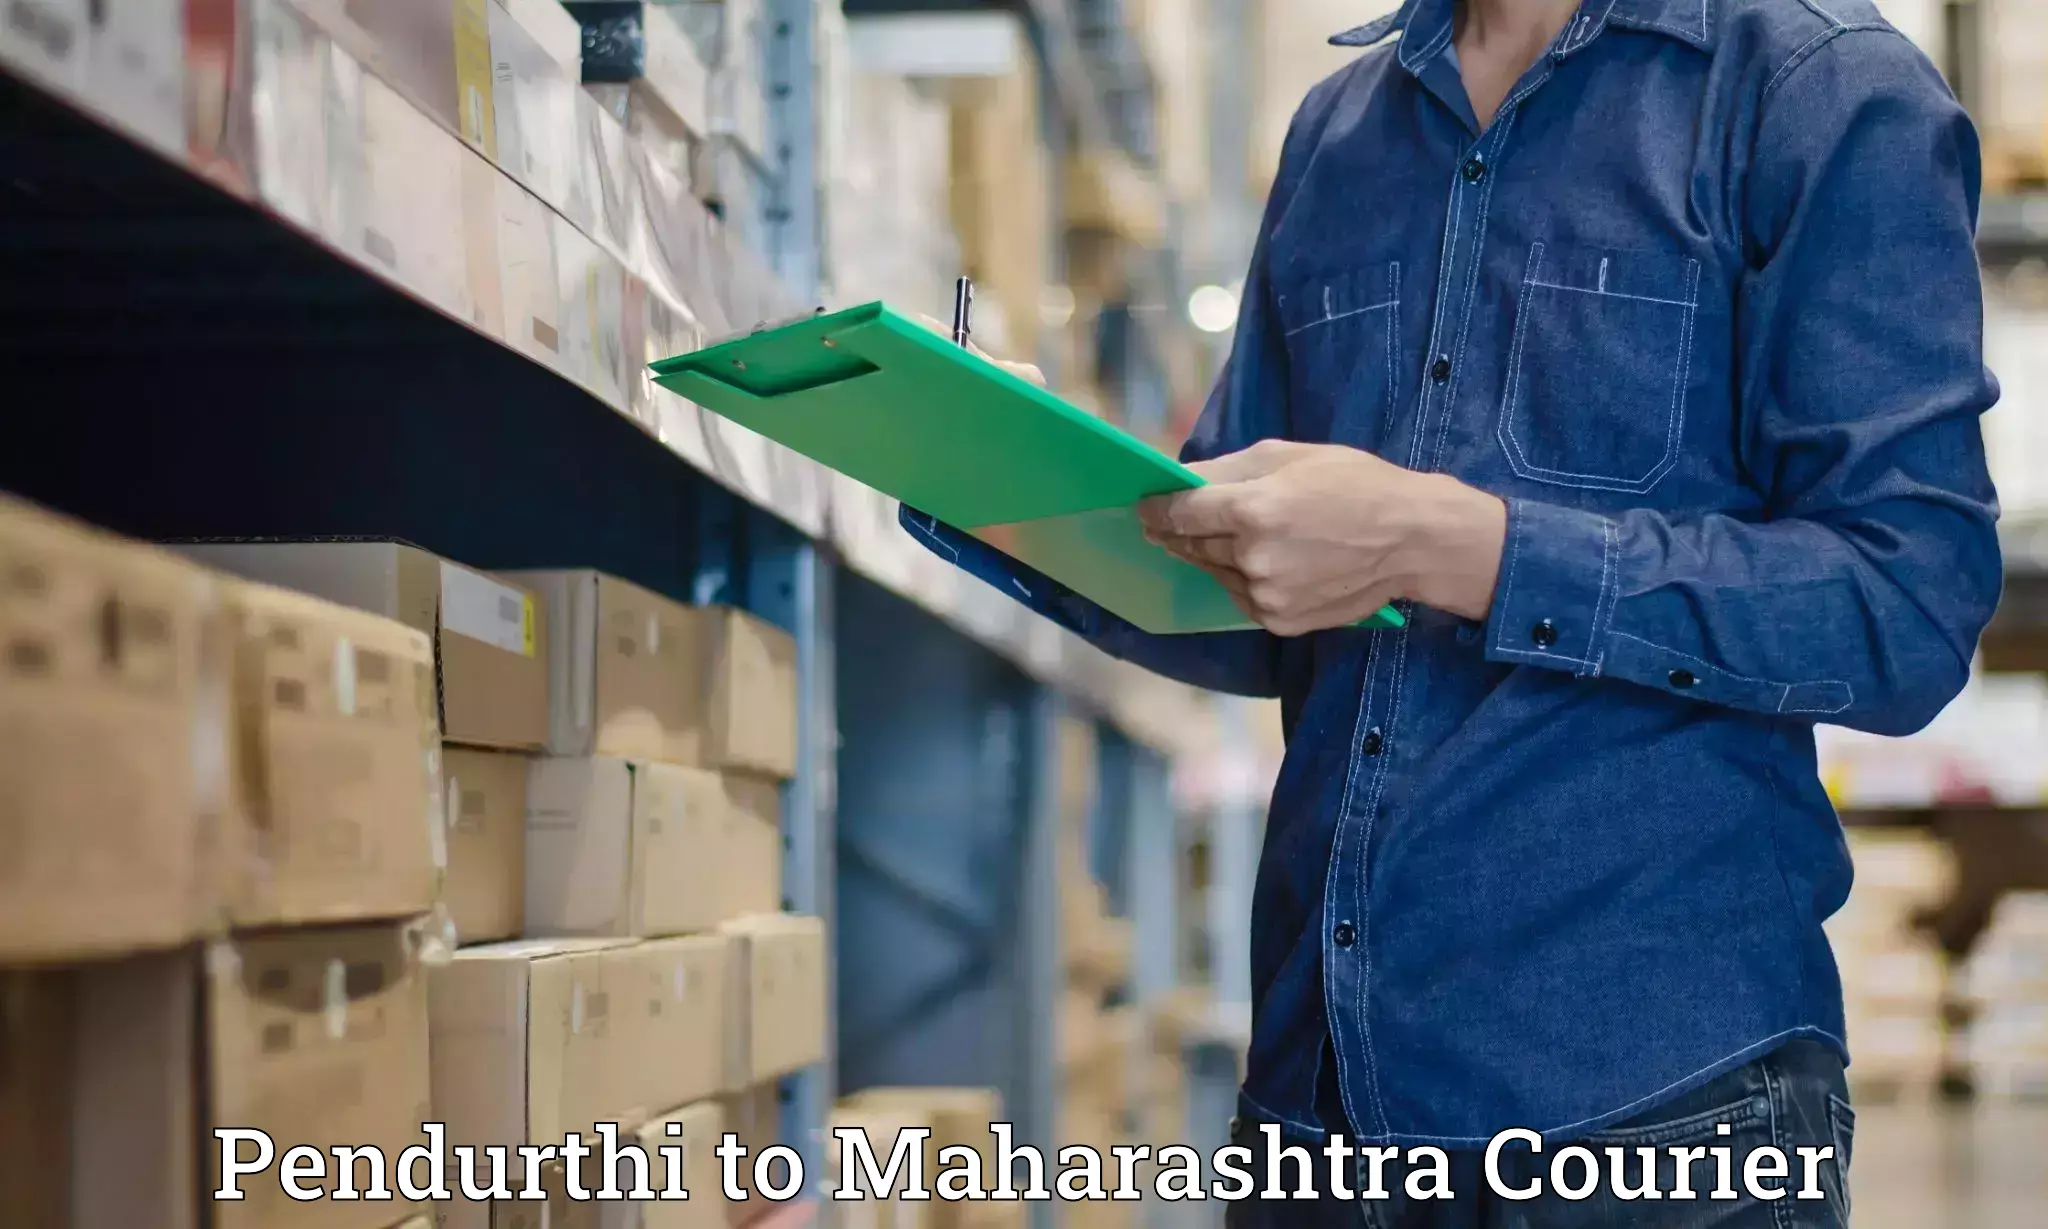 Doorstep delivery service Pendurthi to Maharashtra